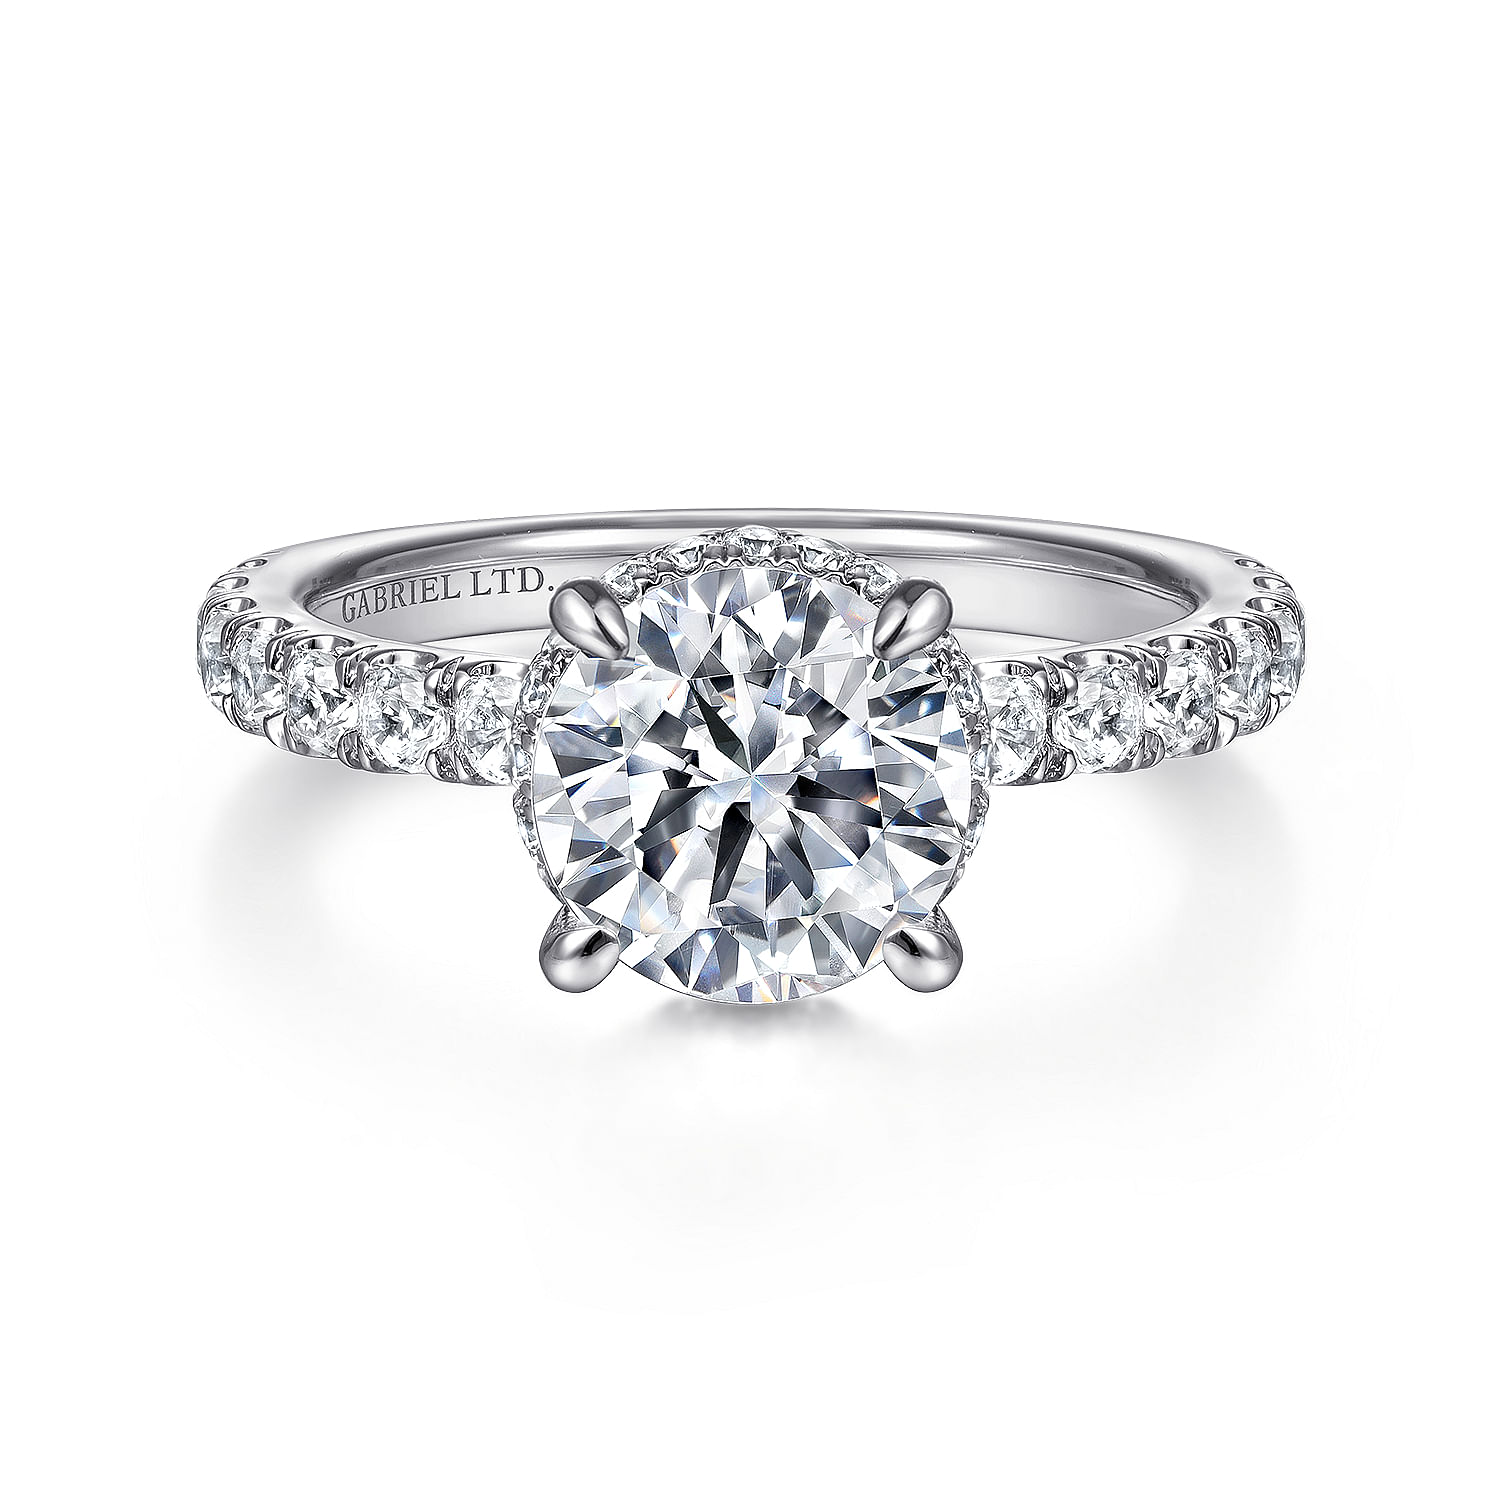 Dover - 18K White Gold Hidden Halo Round Diamond Engagement Ring